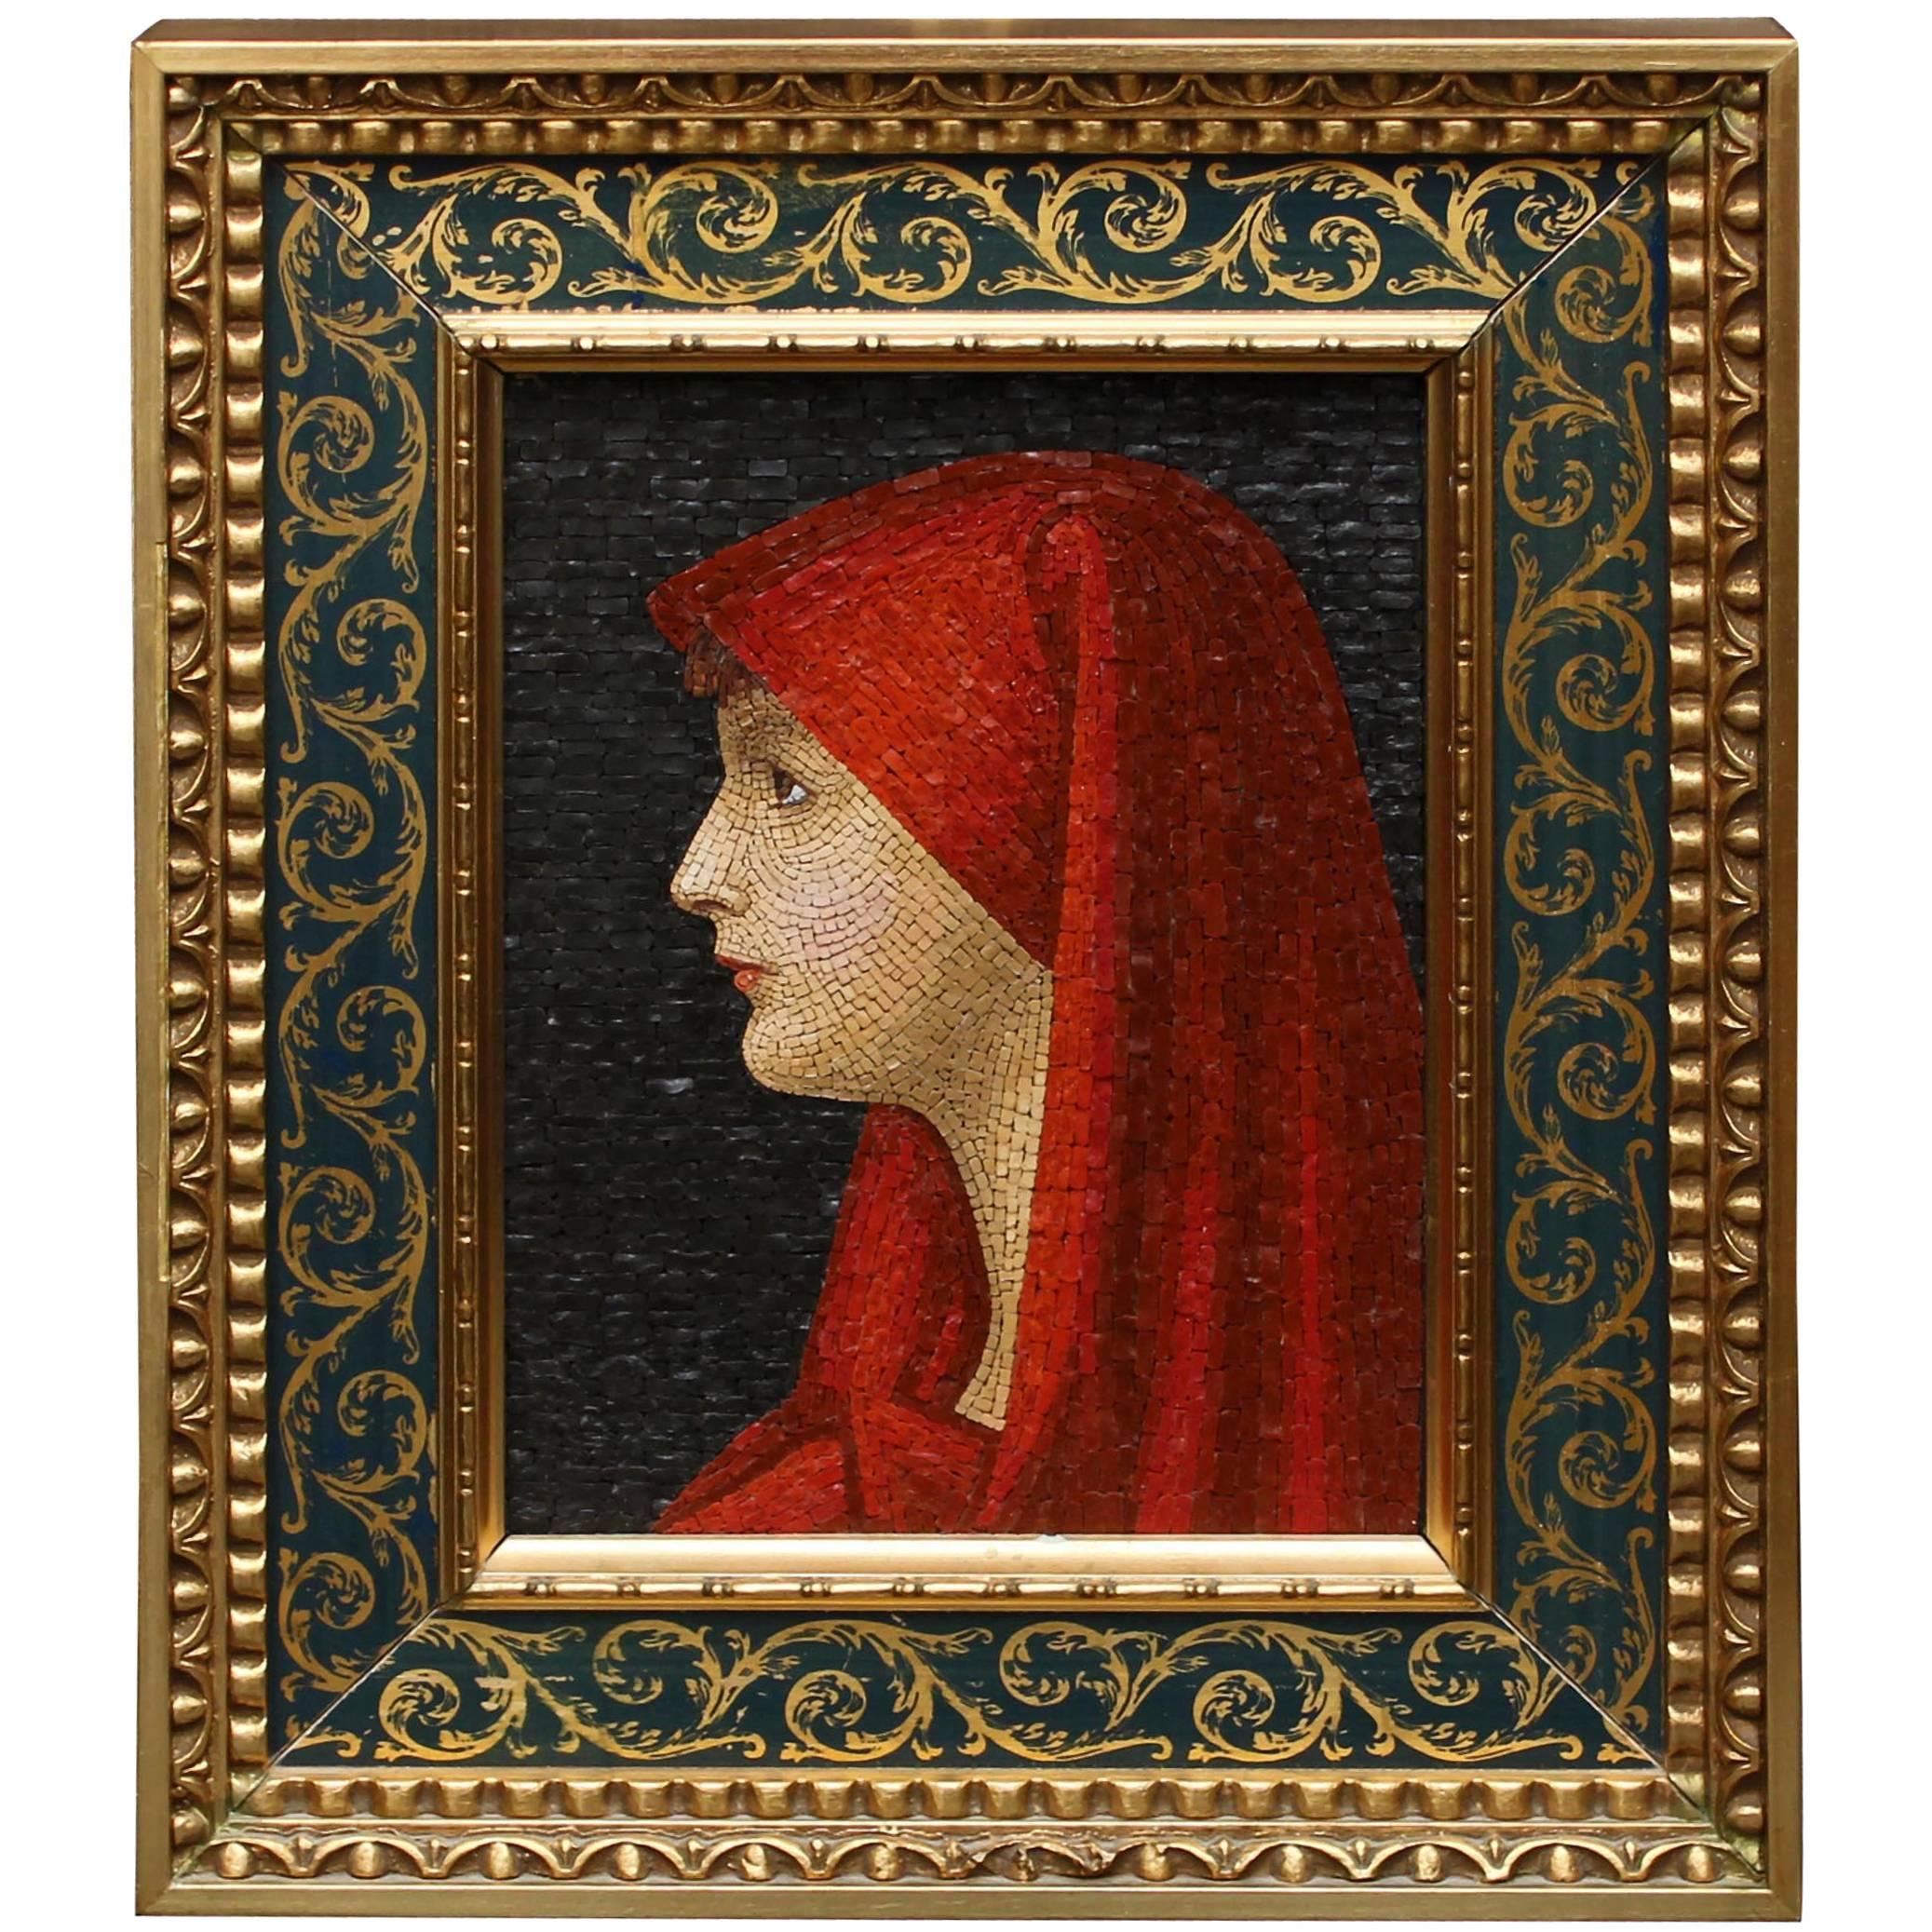 Large Italian Micromosaic Plaque "Woman in Red Veil" Vatican Workshop